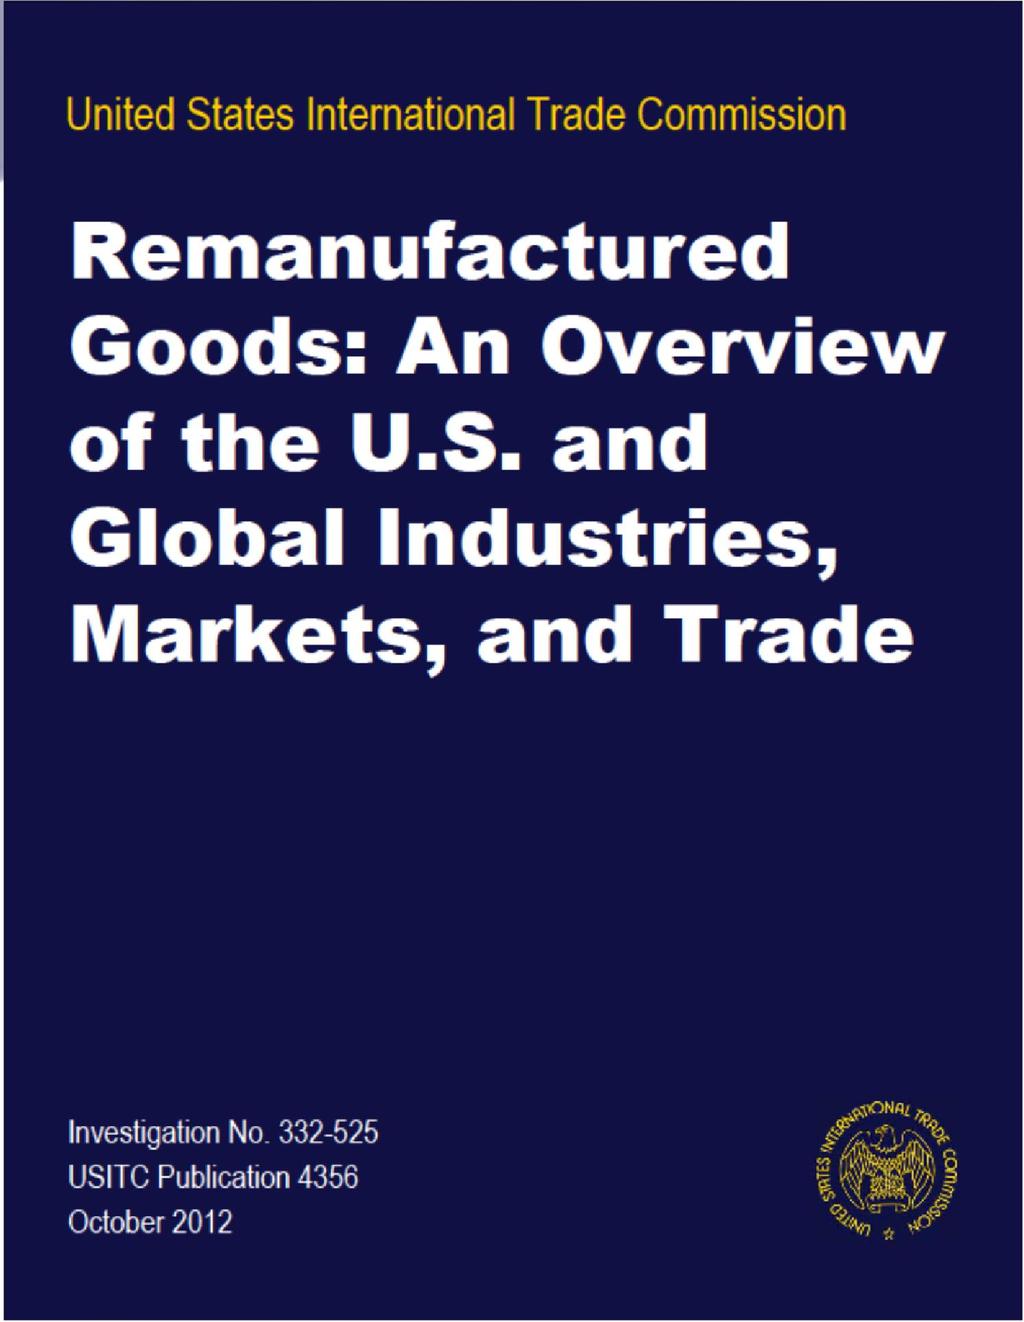 International Trade Commission Study